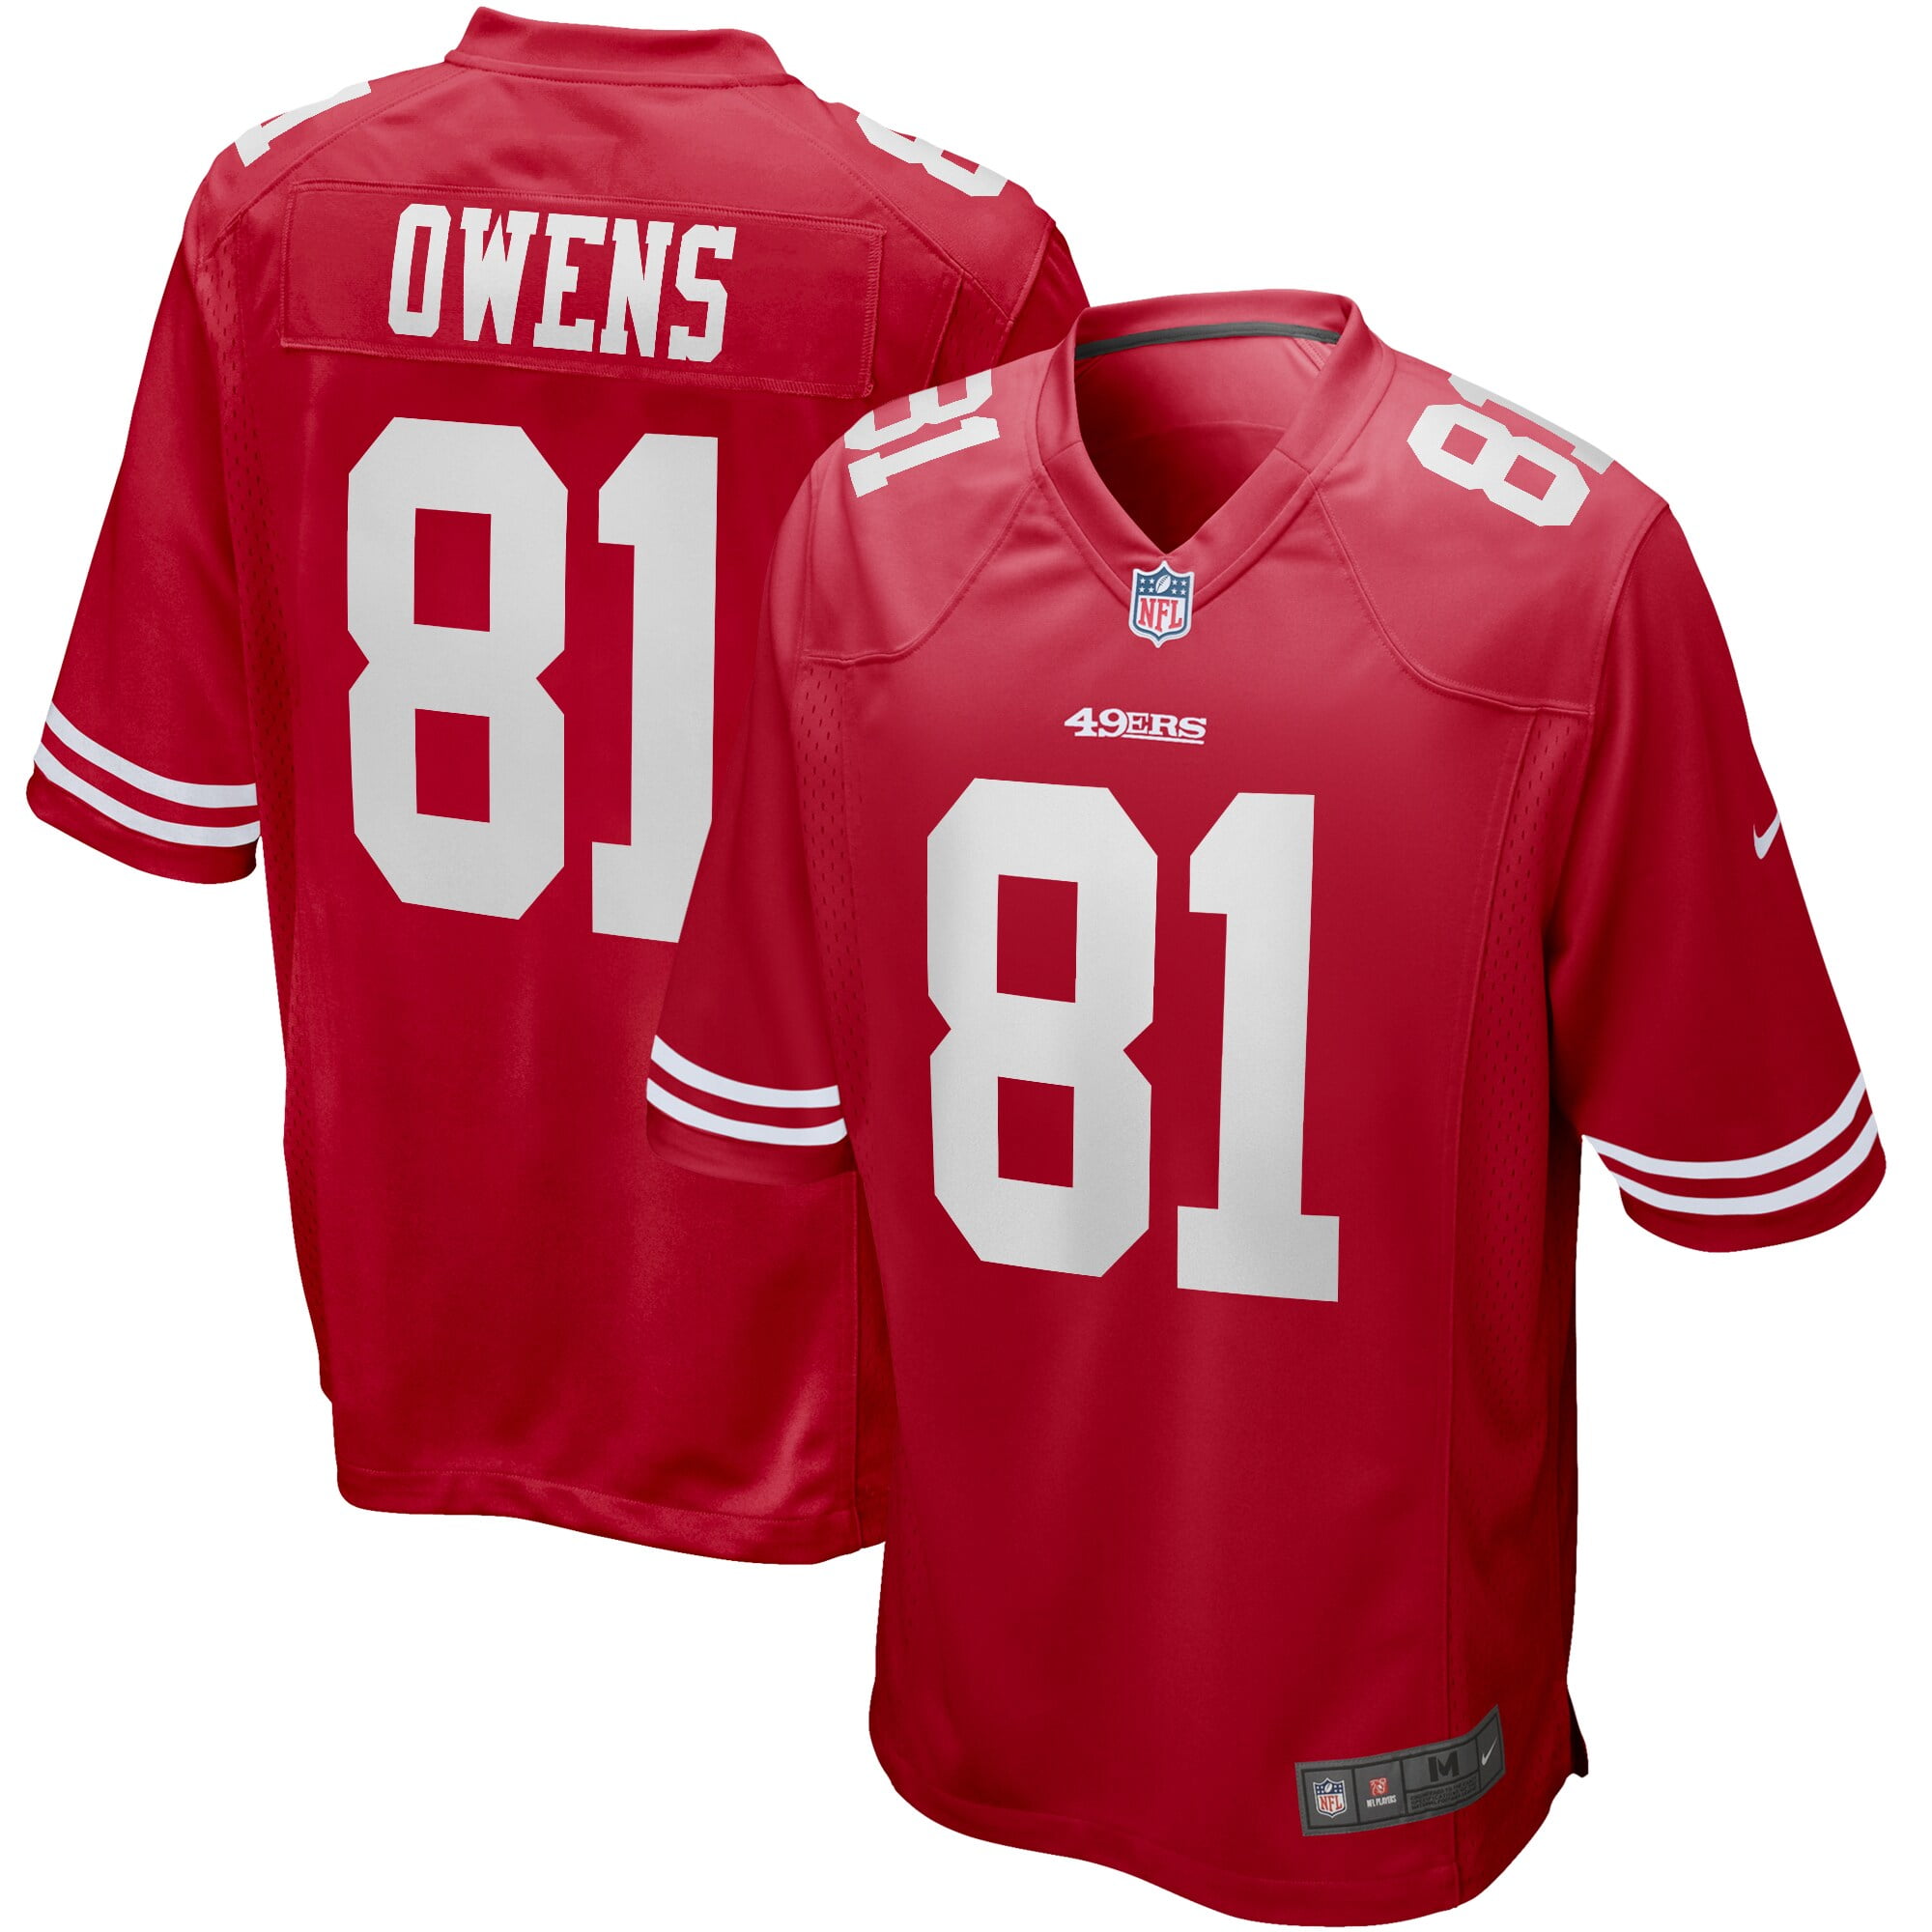 owens 49ers jersey